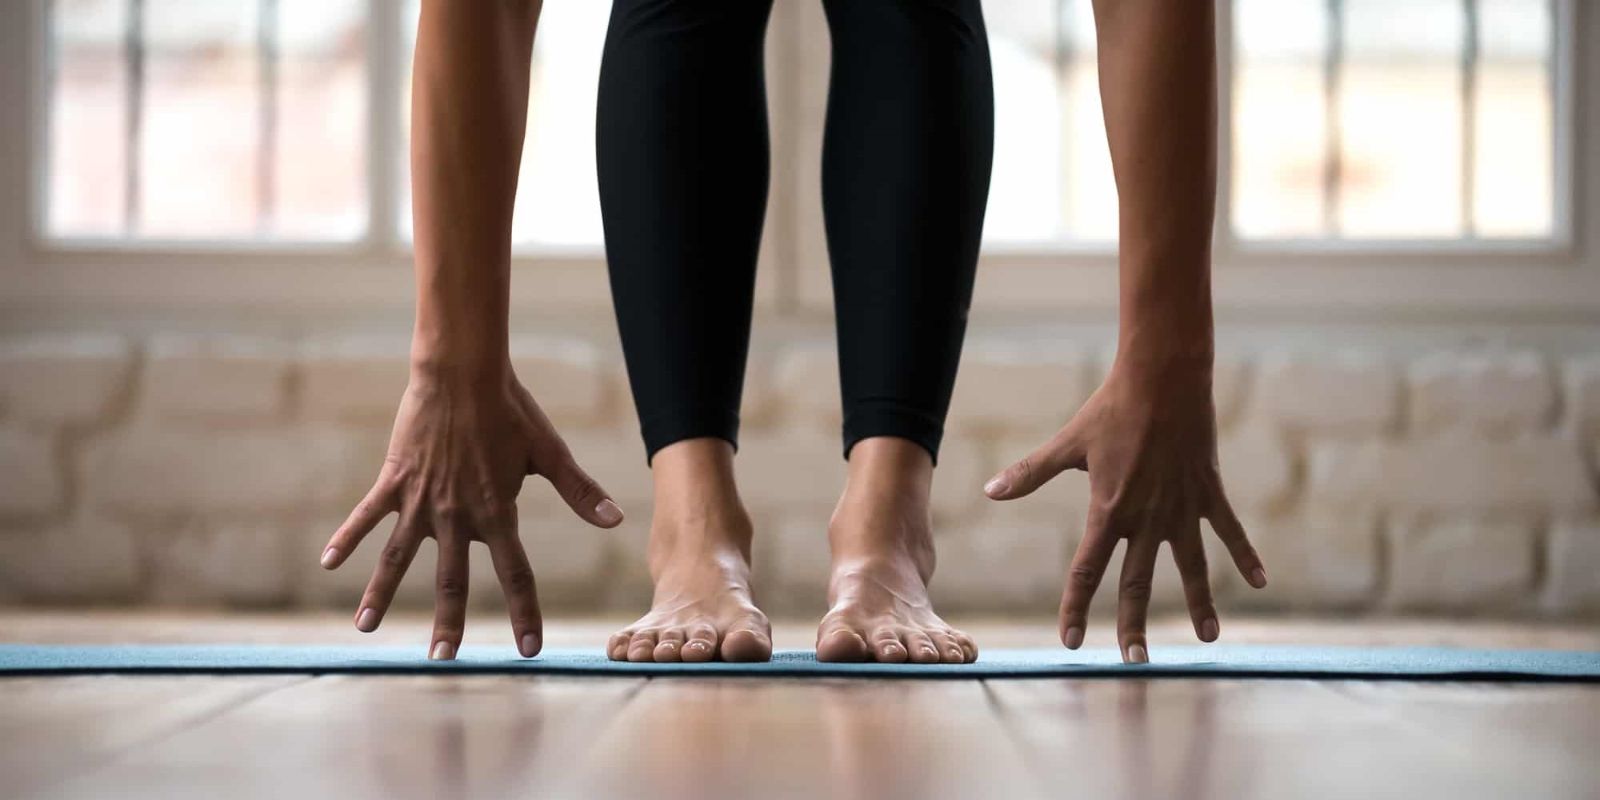 How to Avoid Sweaty Hands in Yoga